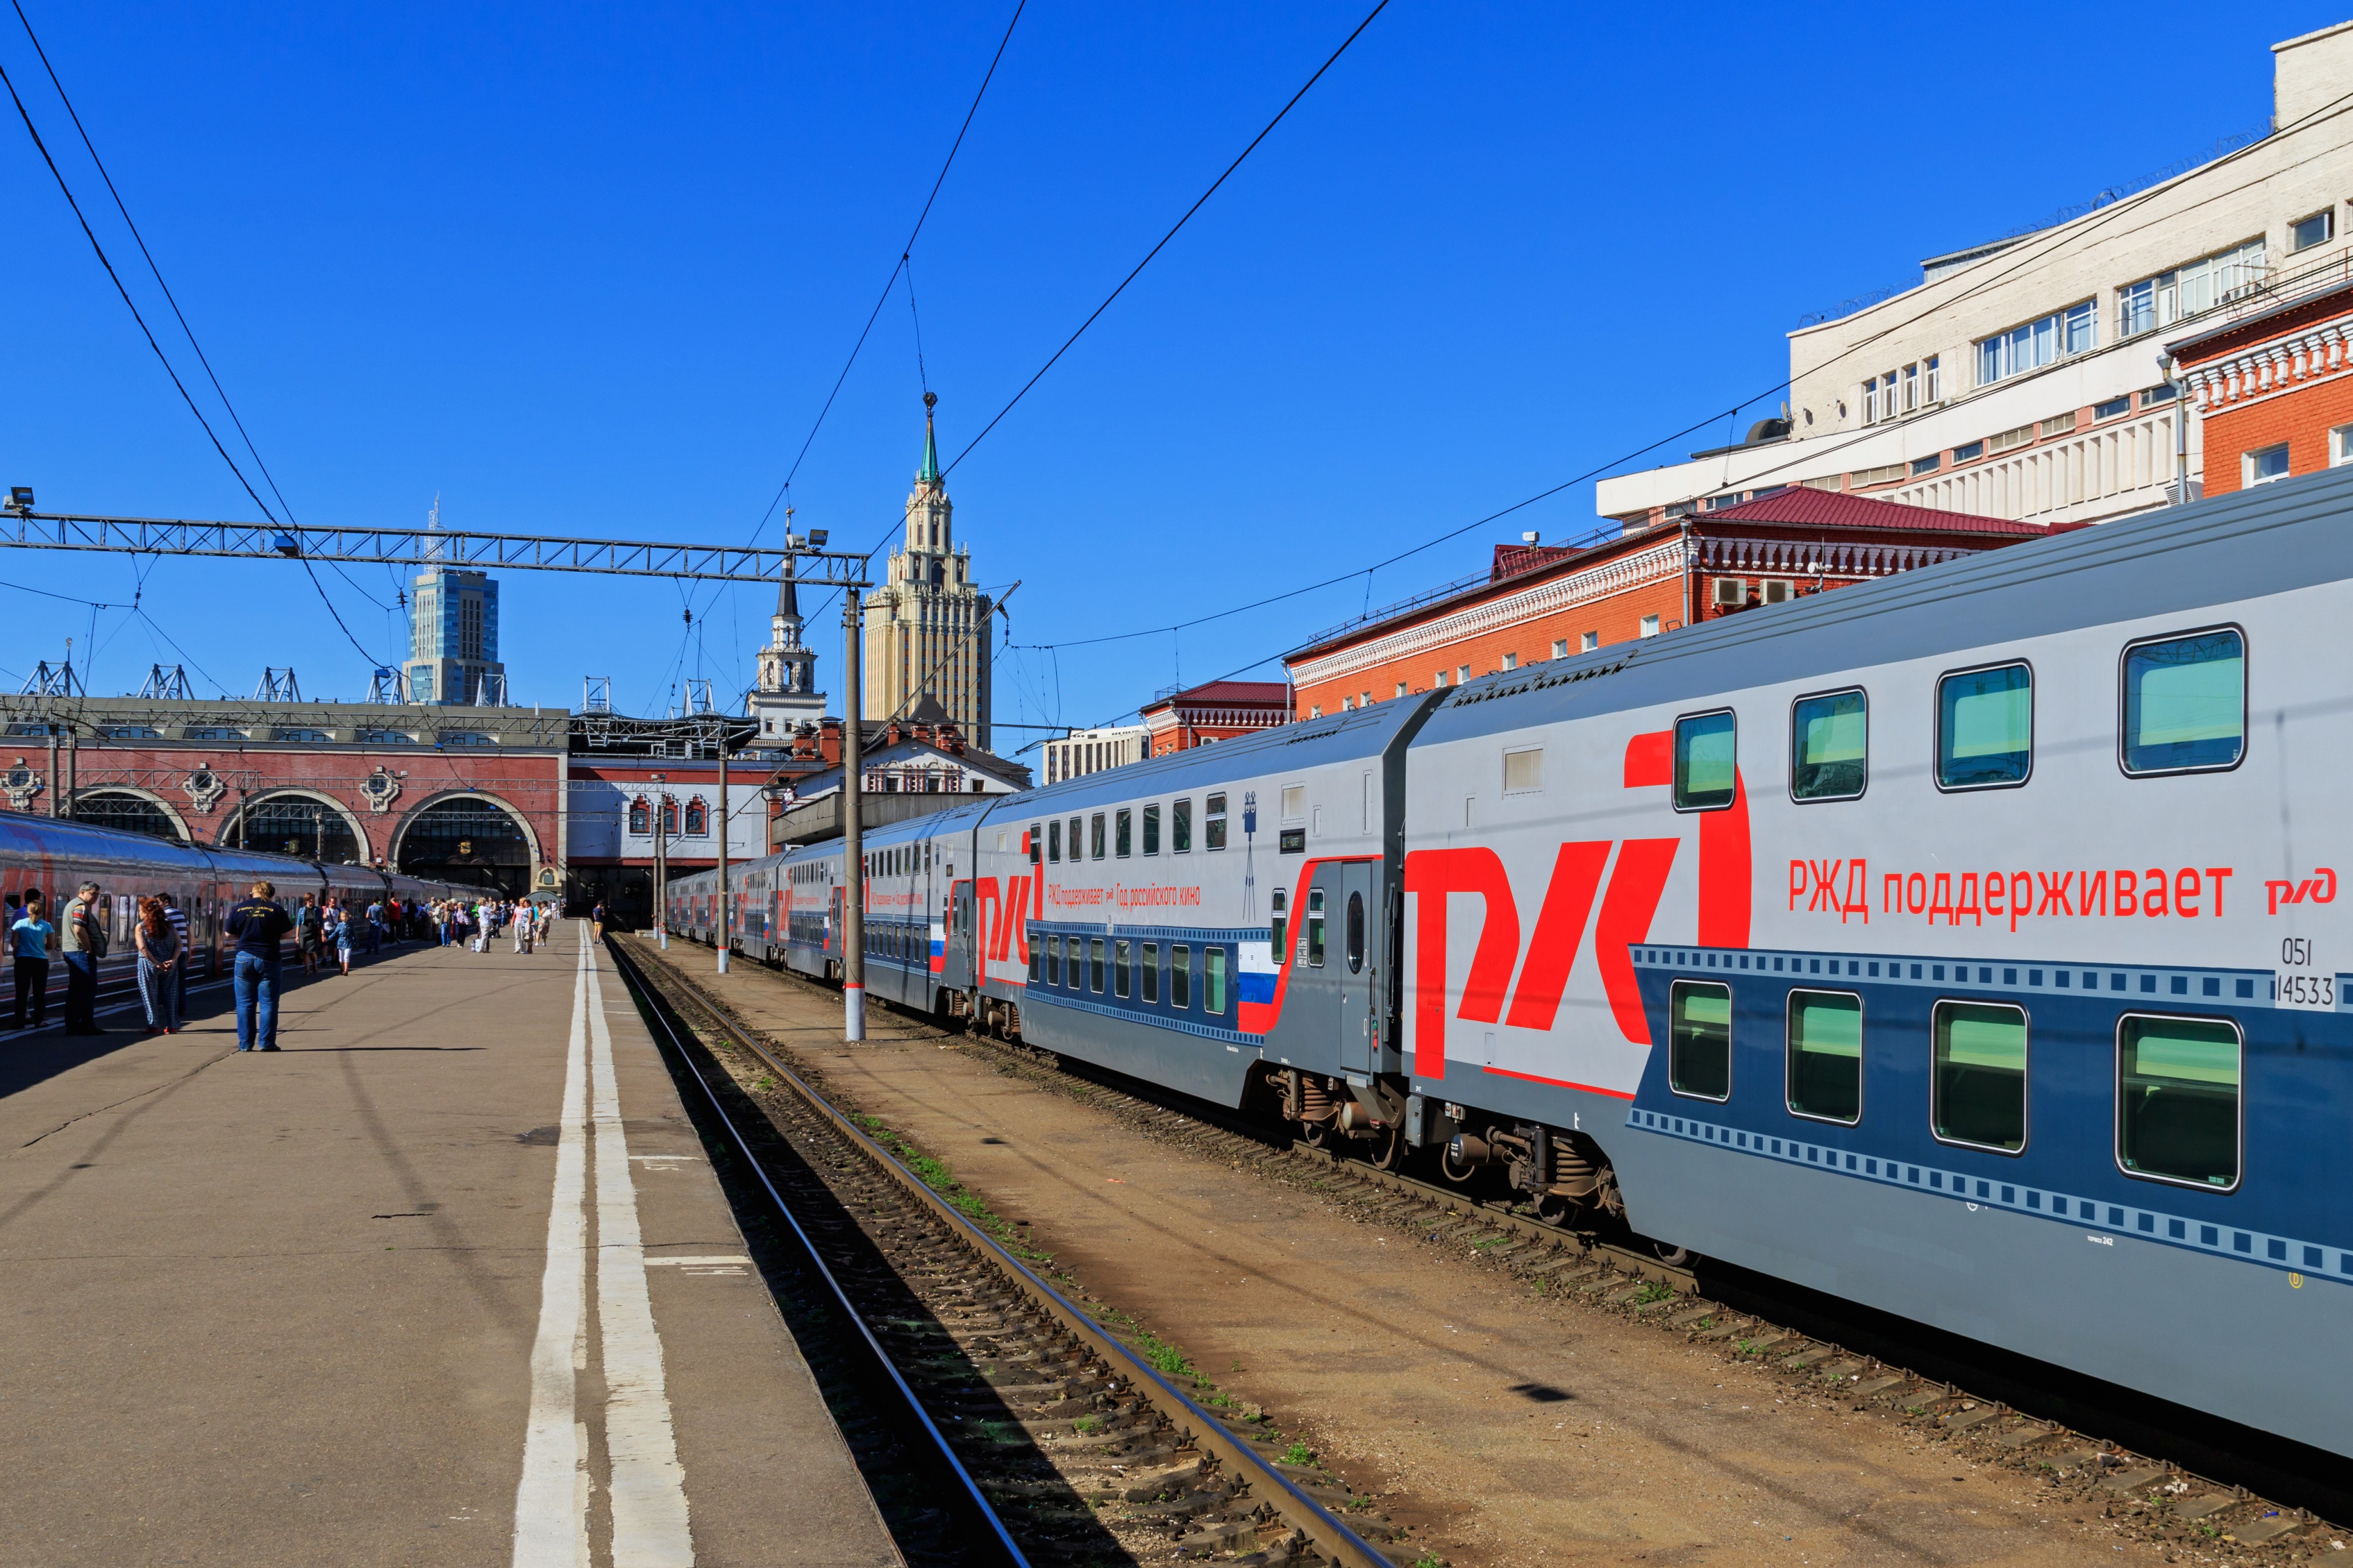 Moscow Kazansky Station TVZ doubledecker train 08-2016 img1